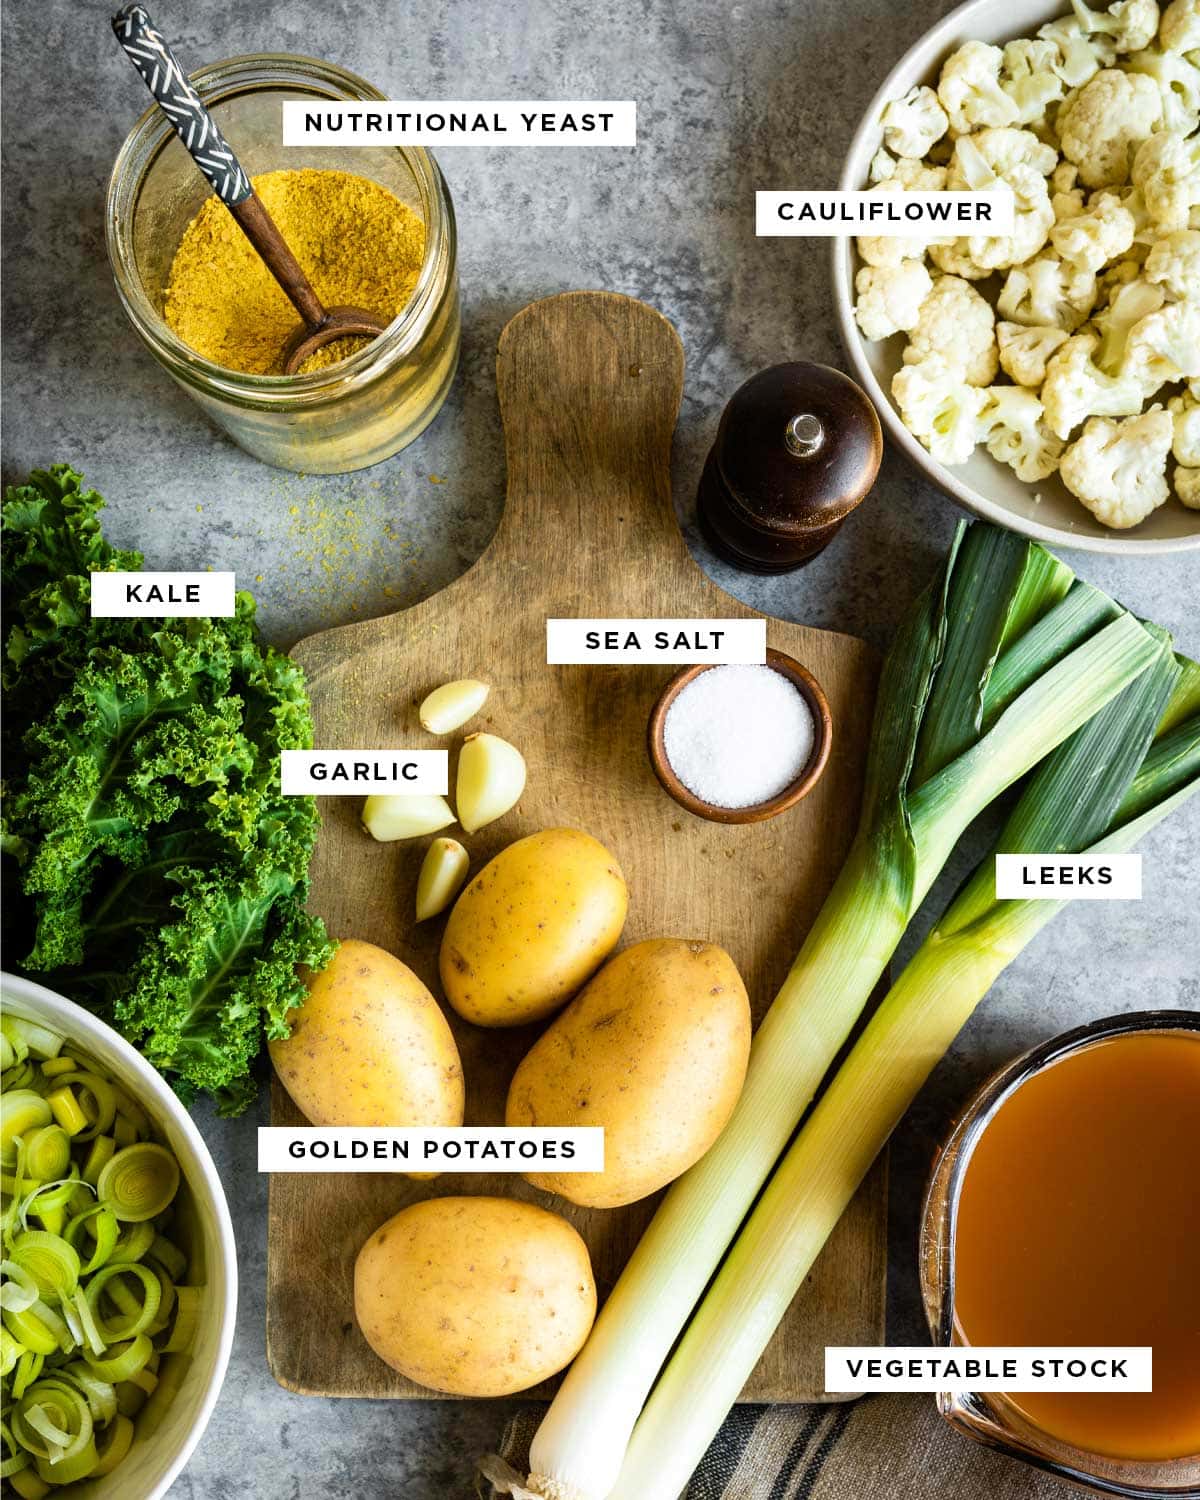 ingredients for potato soup including: nutritional yeast, cauliflower, kale, sea salt, garlic, leeks, golden potatoes and vegetable stock.